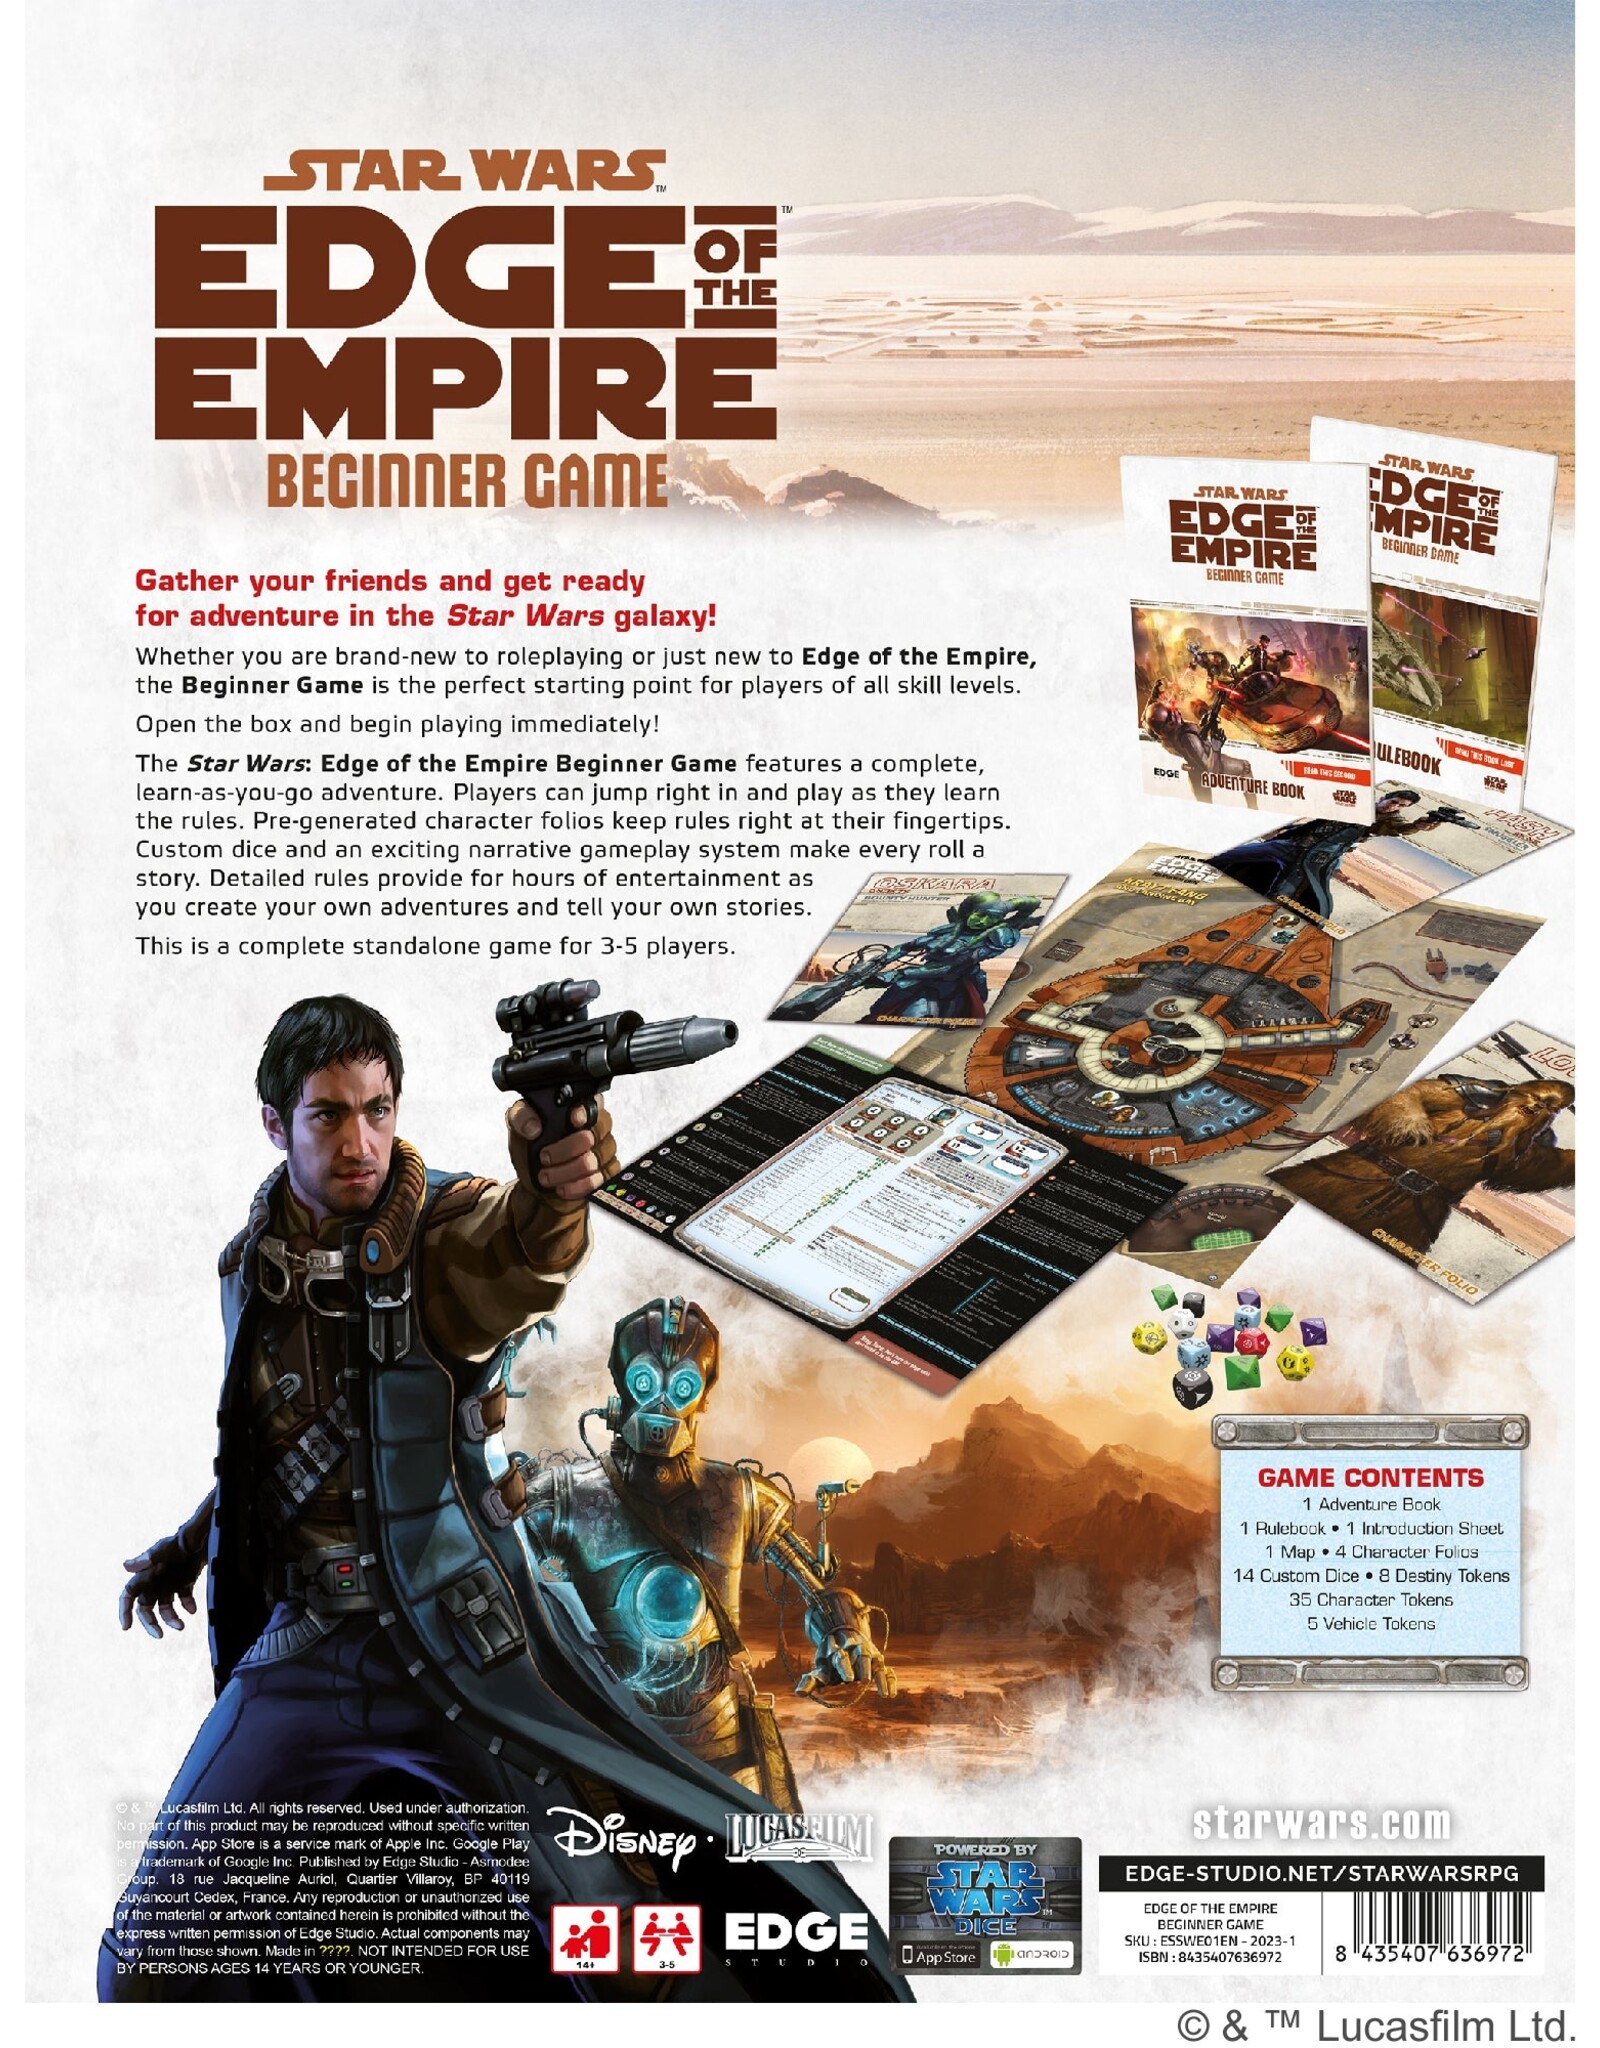 Edge Studio Star Wars - Edge of the Empire Beginner Game